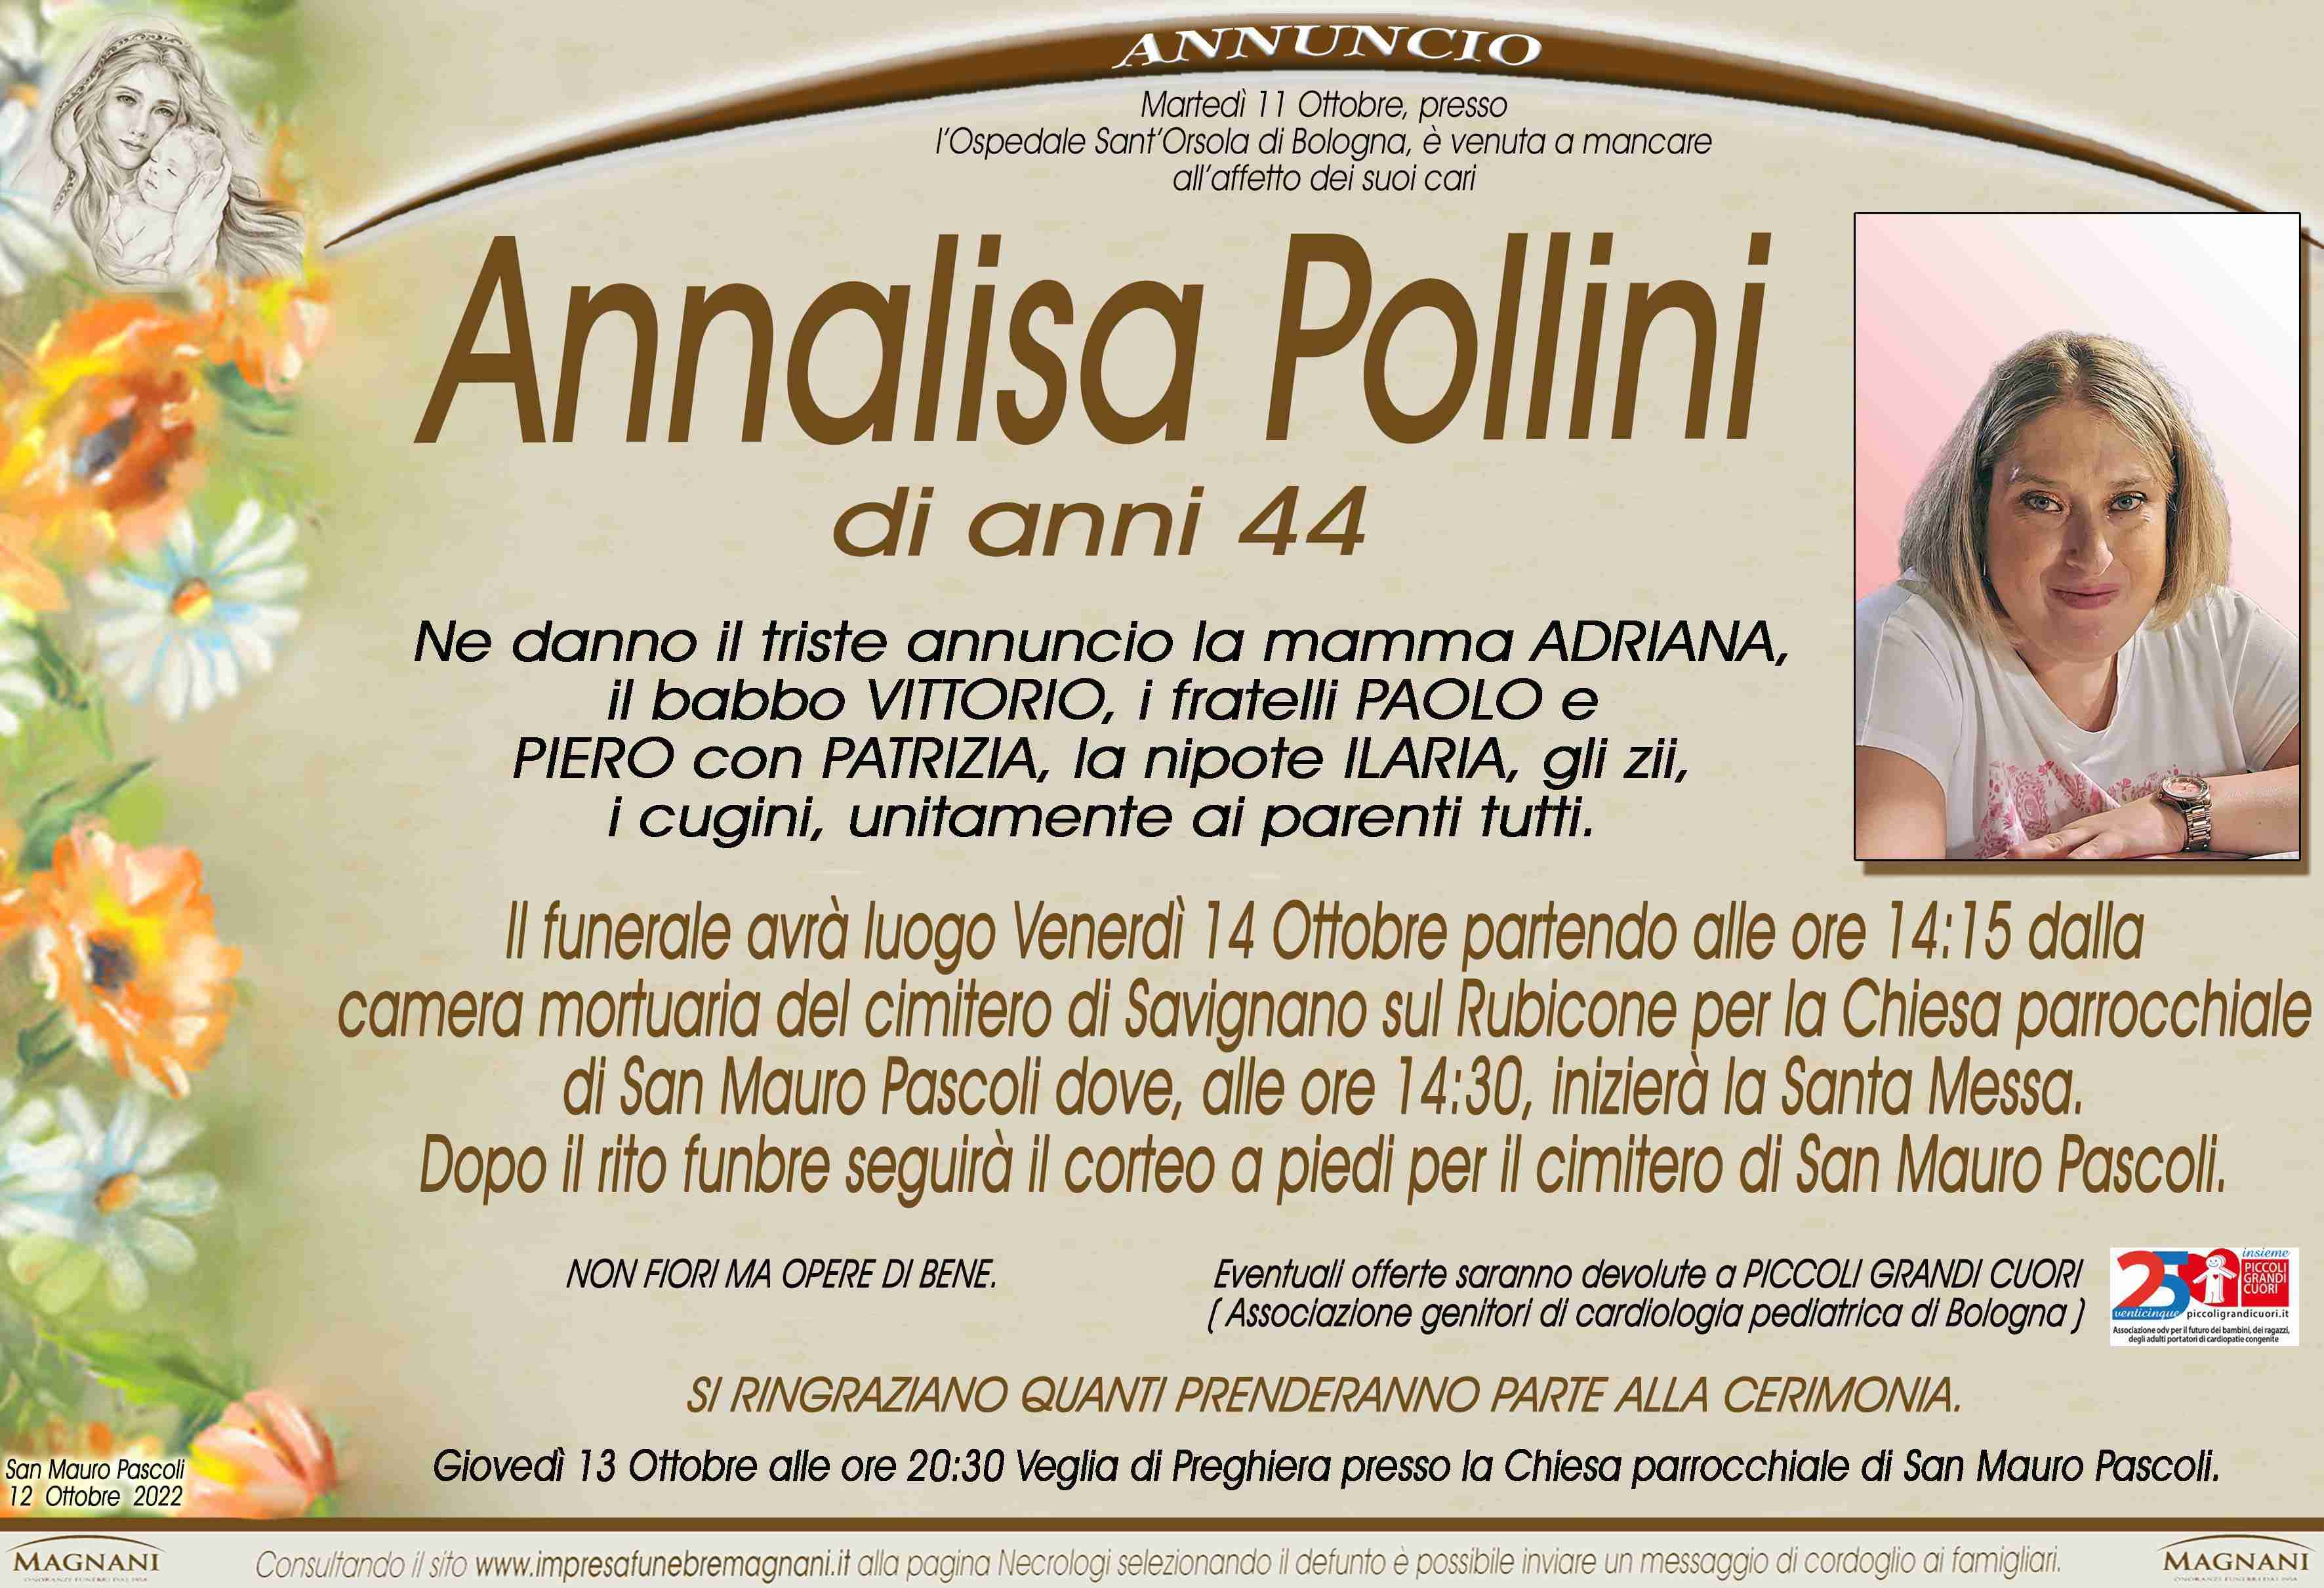 Annalisa Pollini